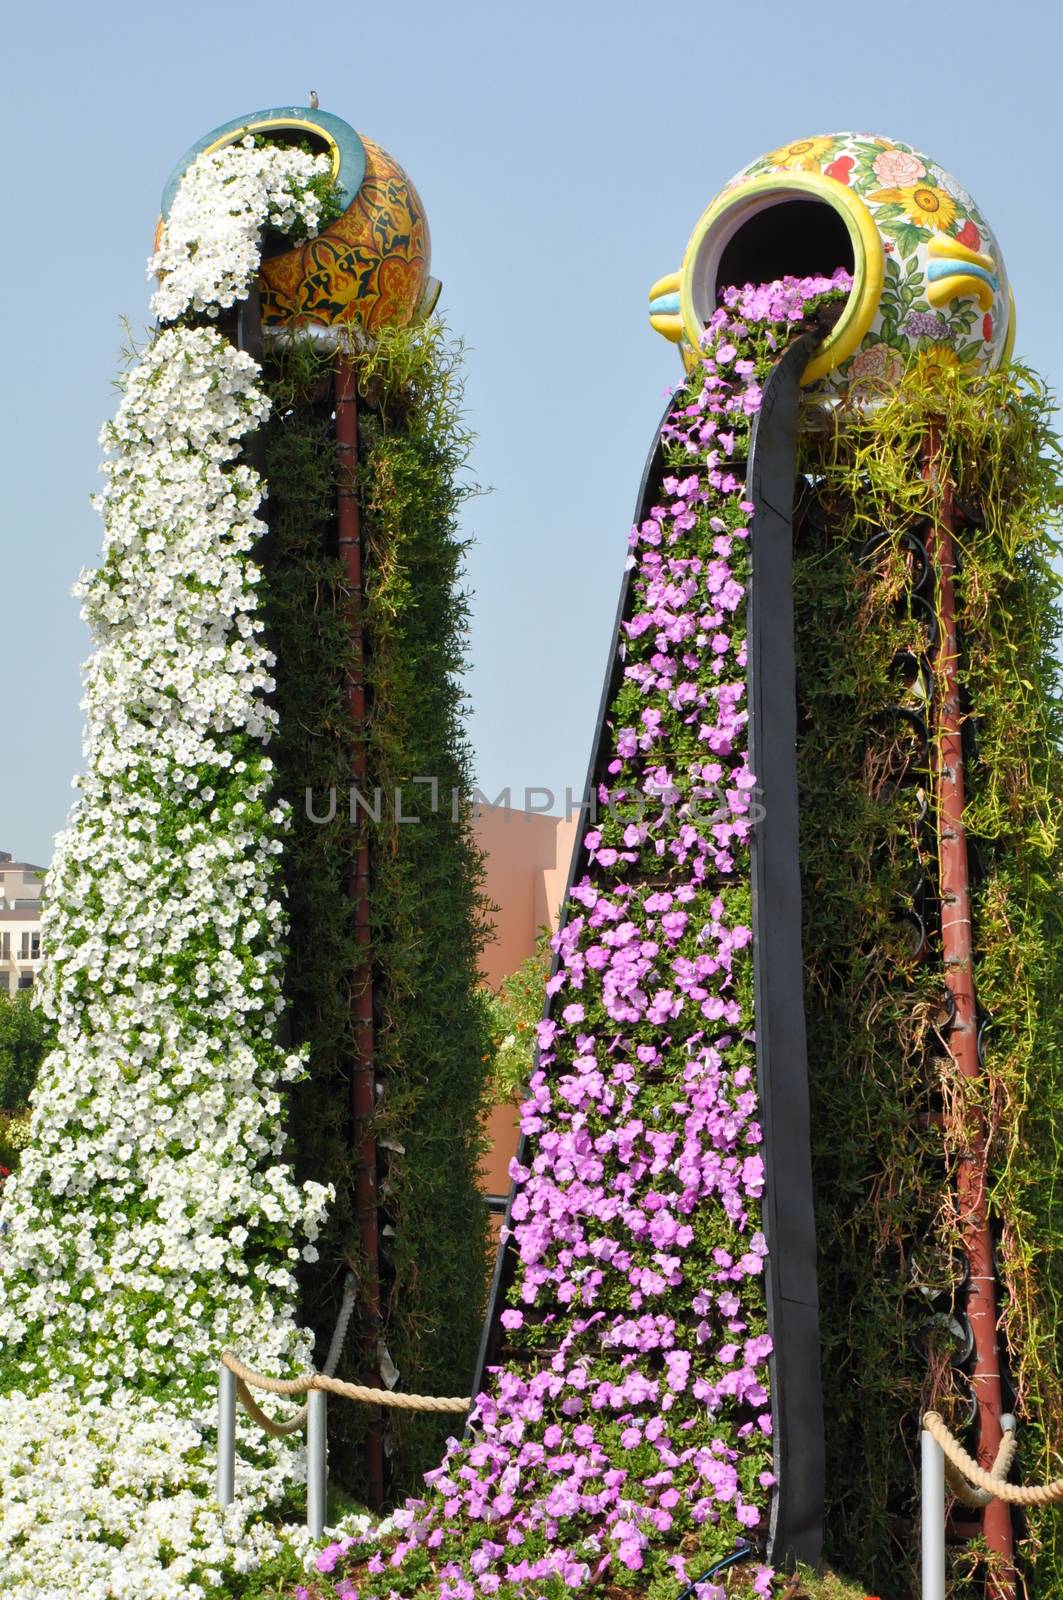 Dubai Miracle Garden in the UAE by sainaniritu